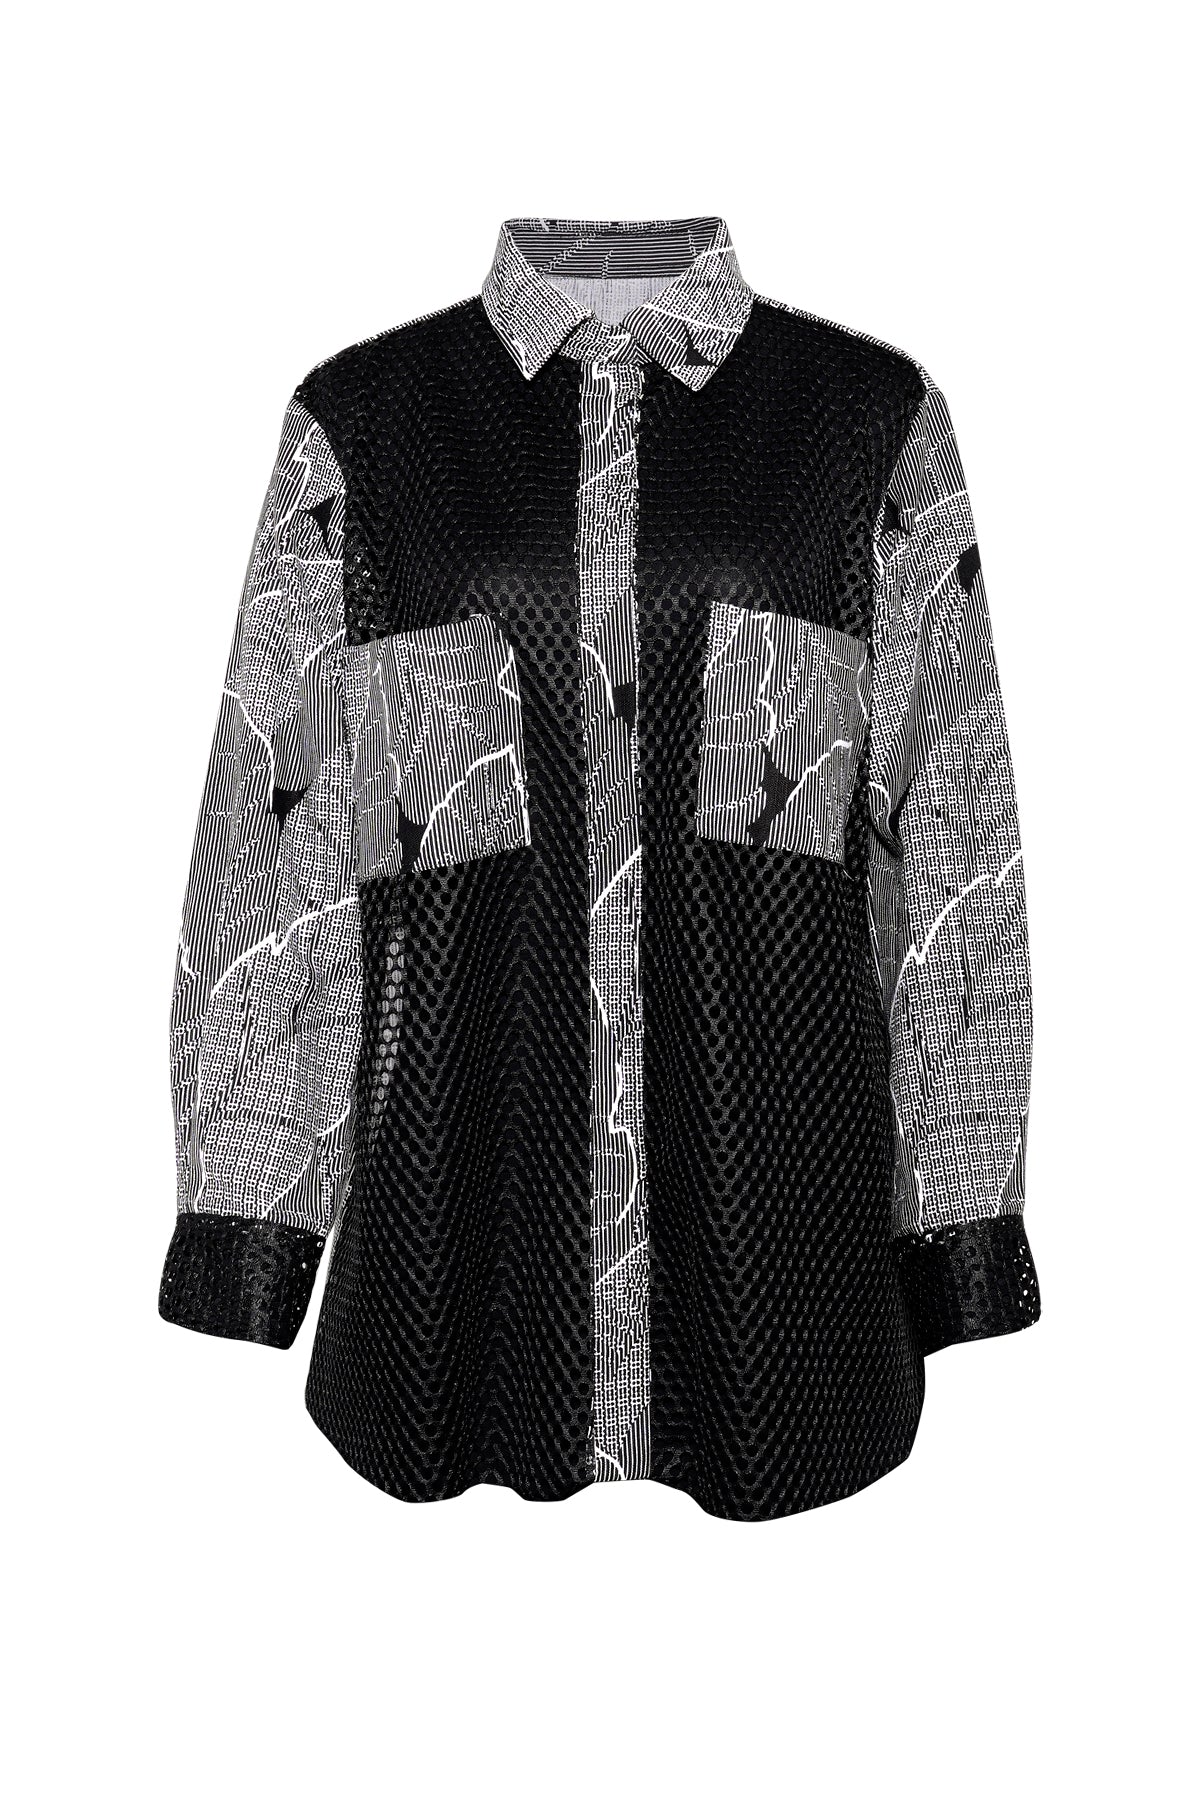 Siena Jacquard Shirt - Black